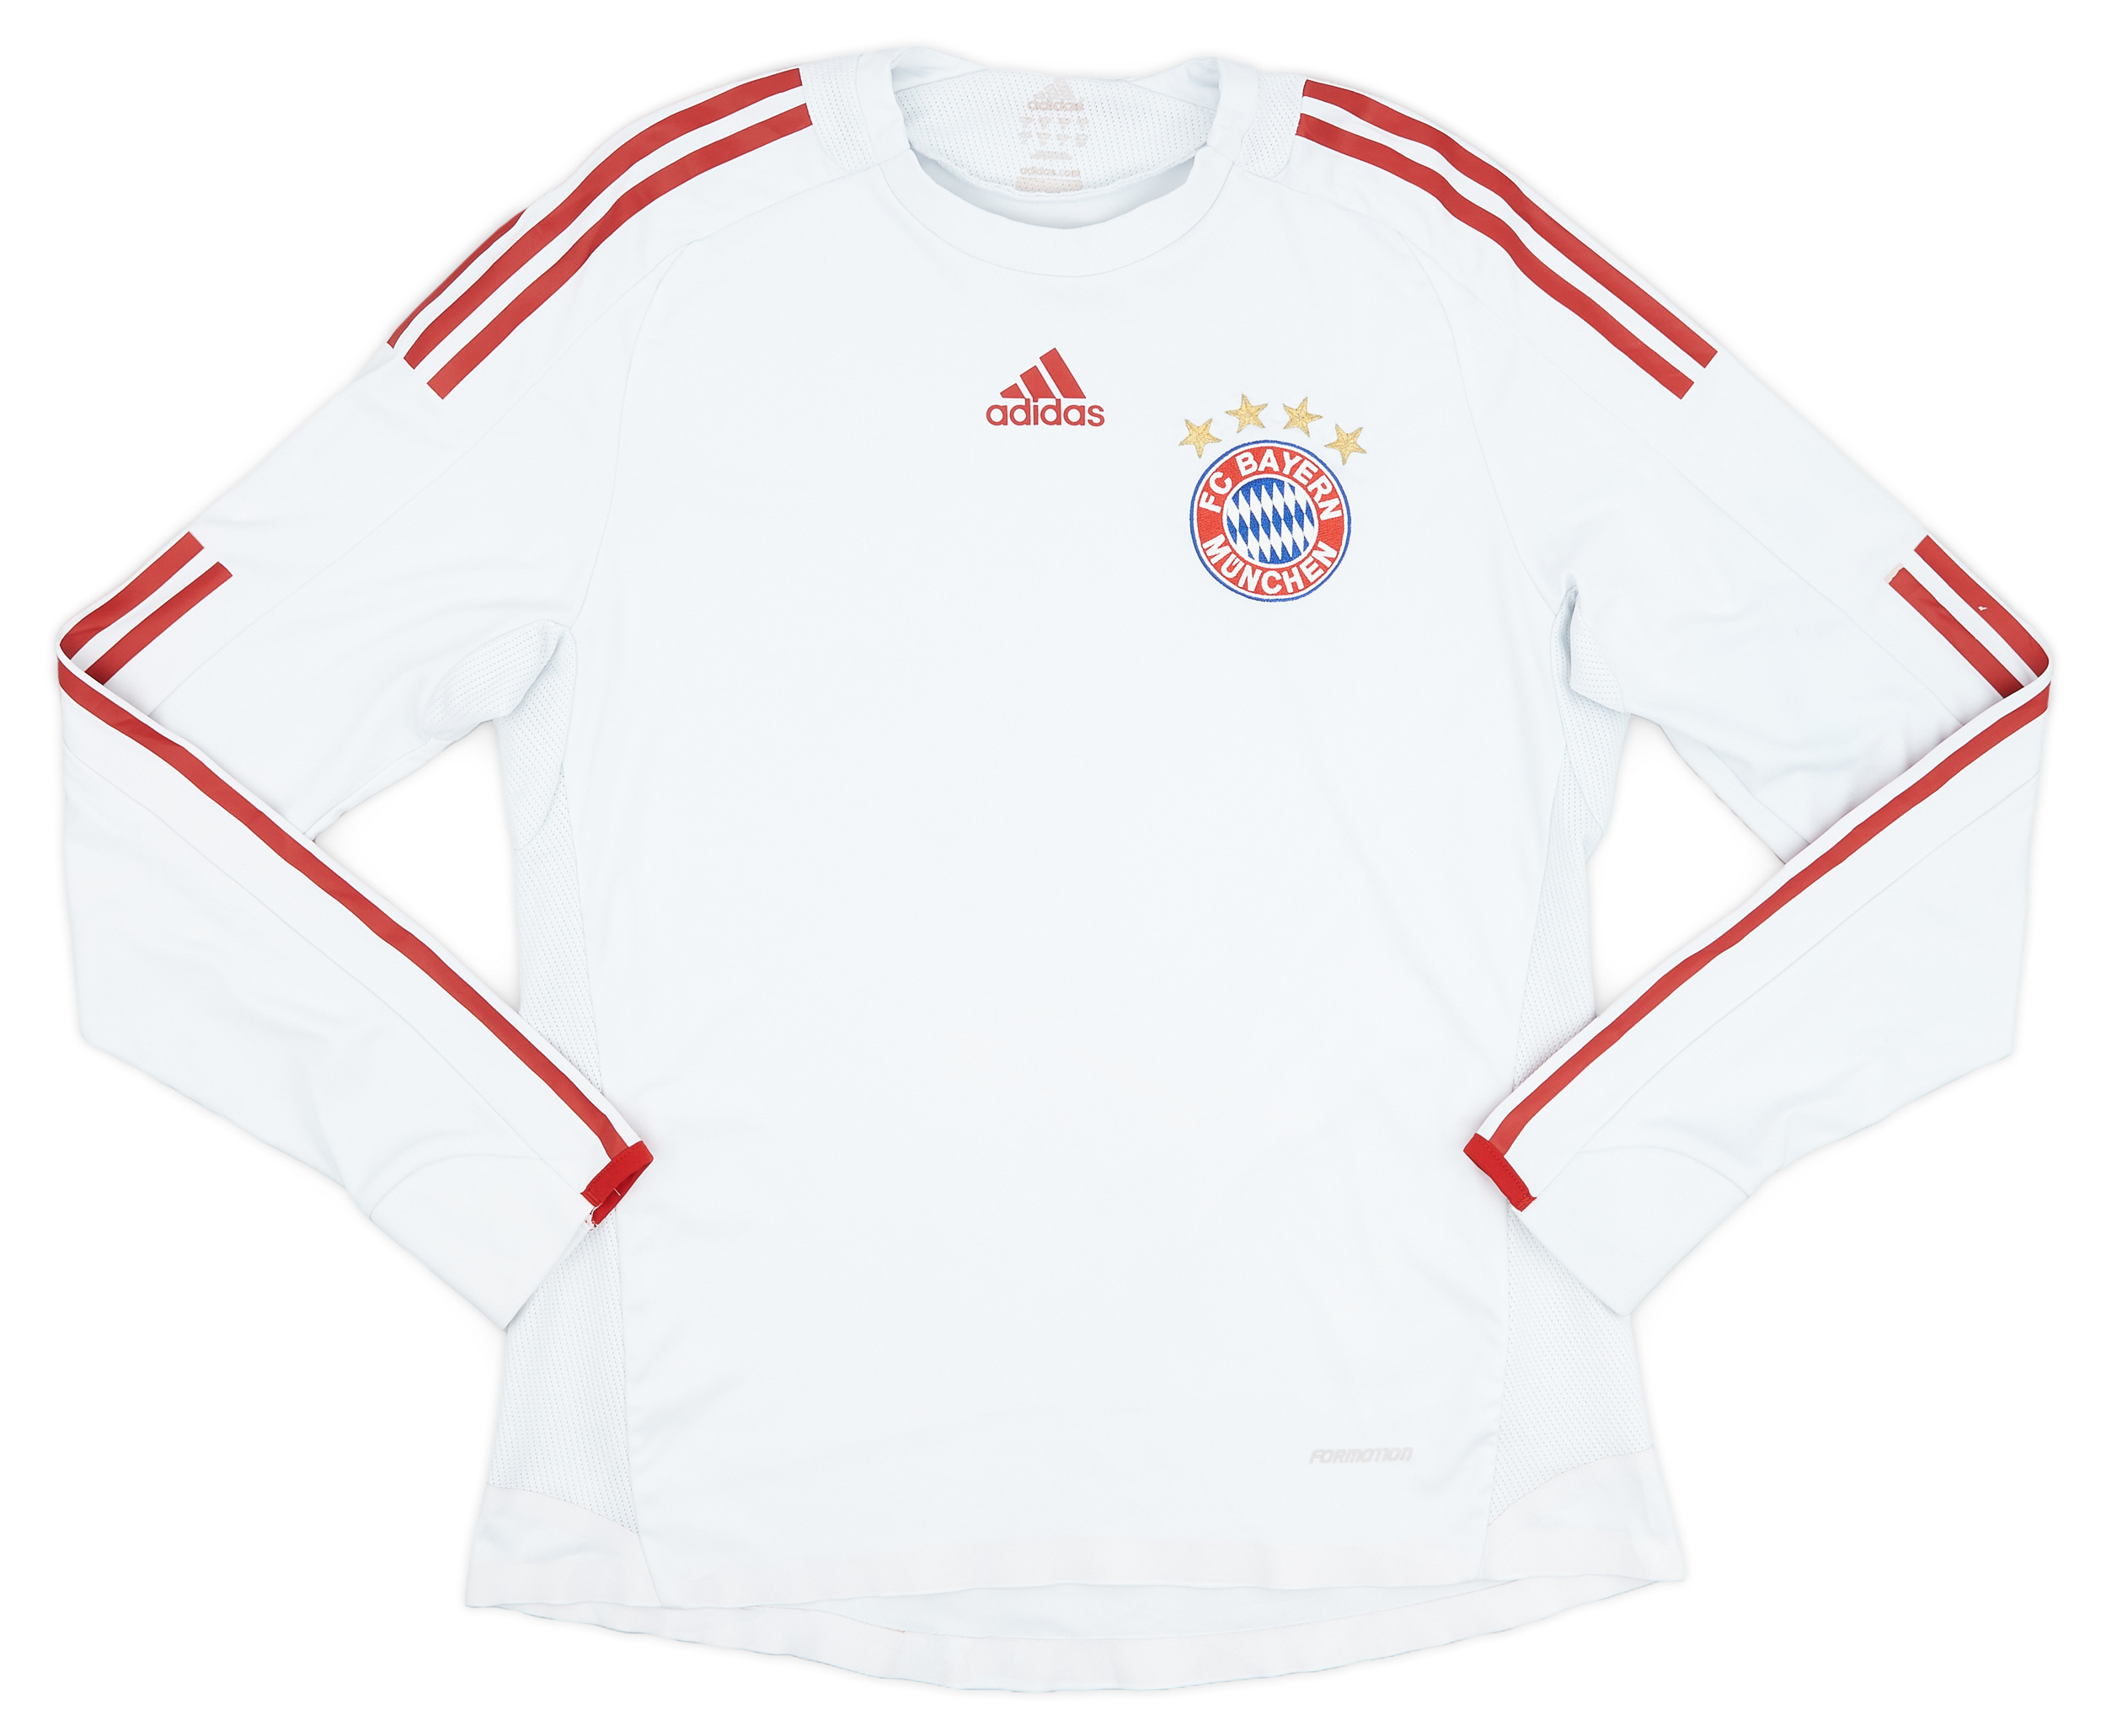 2008-09 Bayern Munich Player Issue CL Shirt - 6/10 - ()